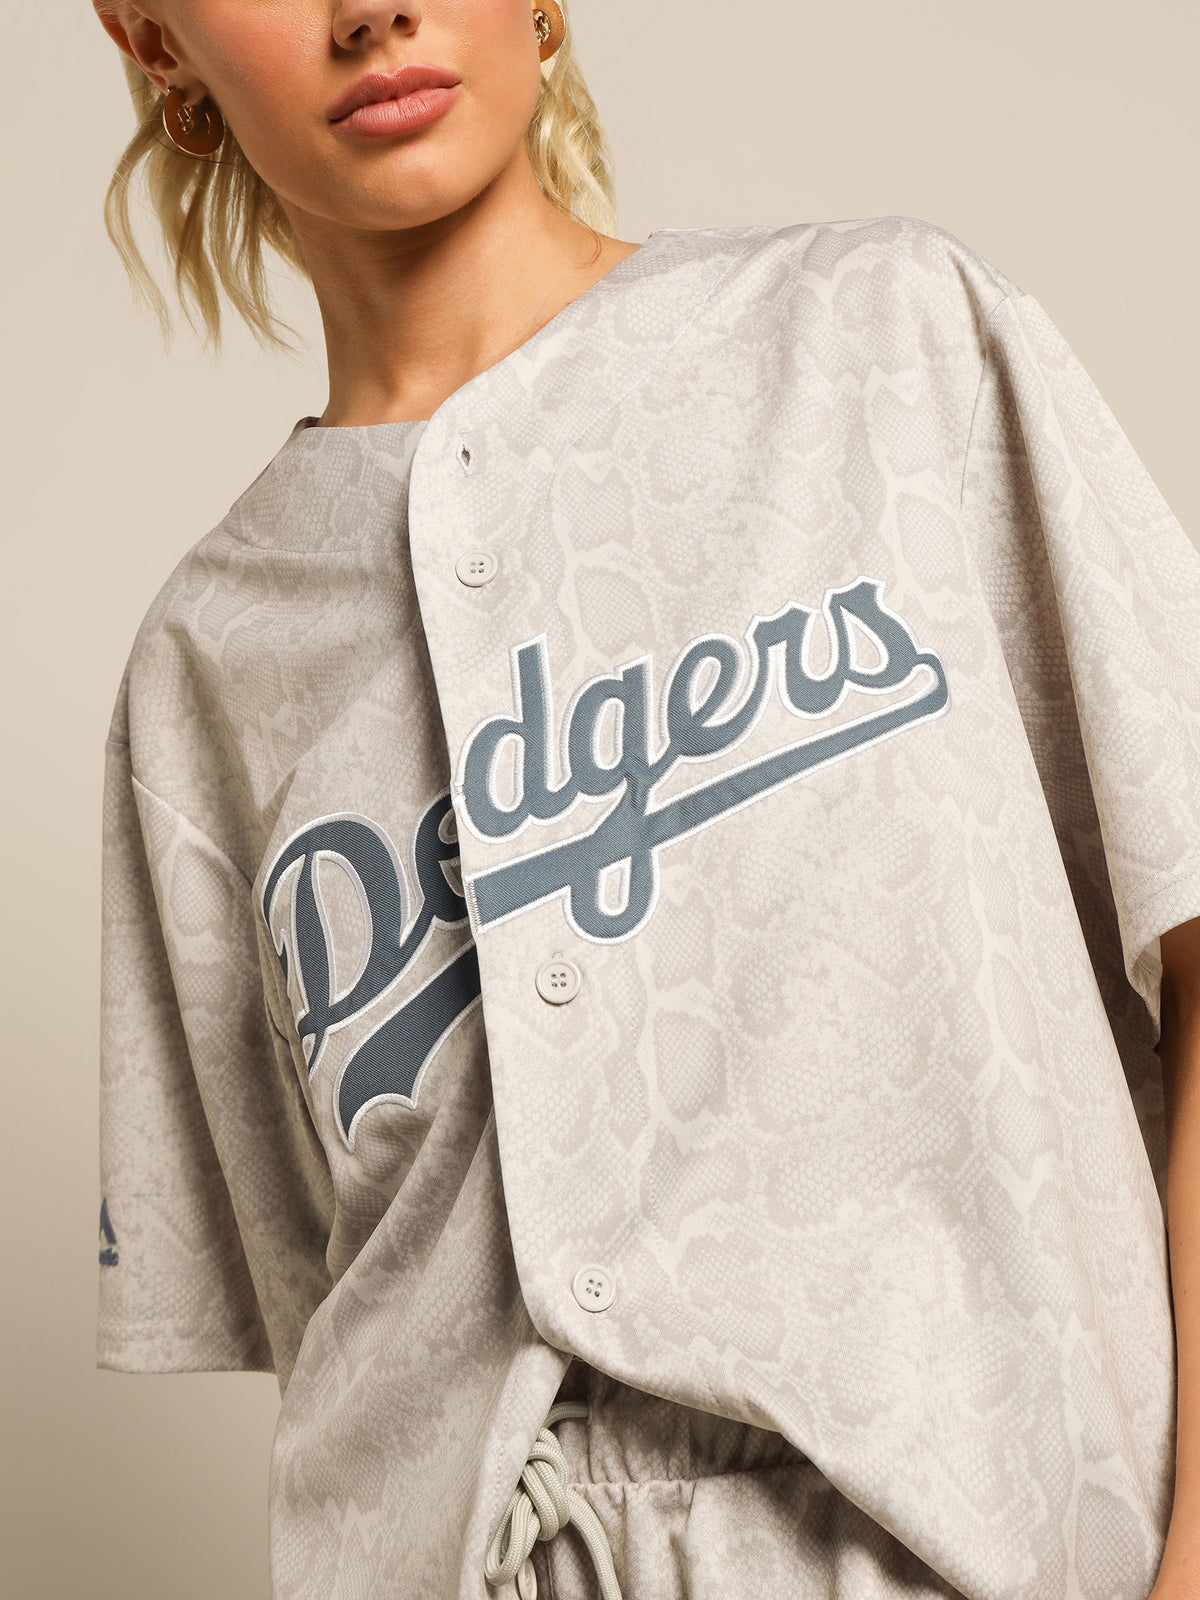 Animal Wordmark LA Dodgers Replica Jersey in Silver Grey